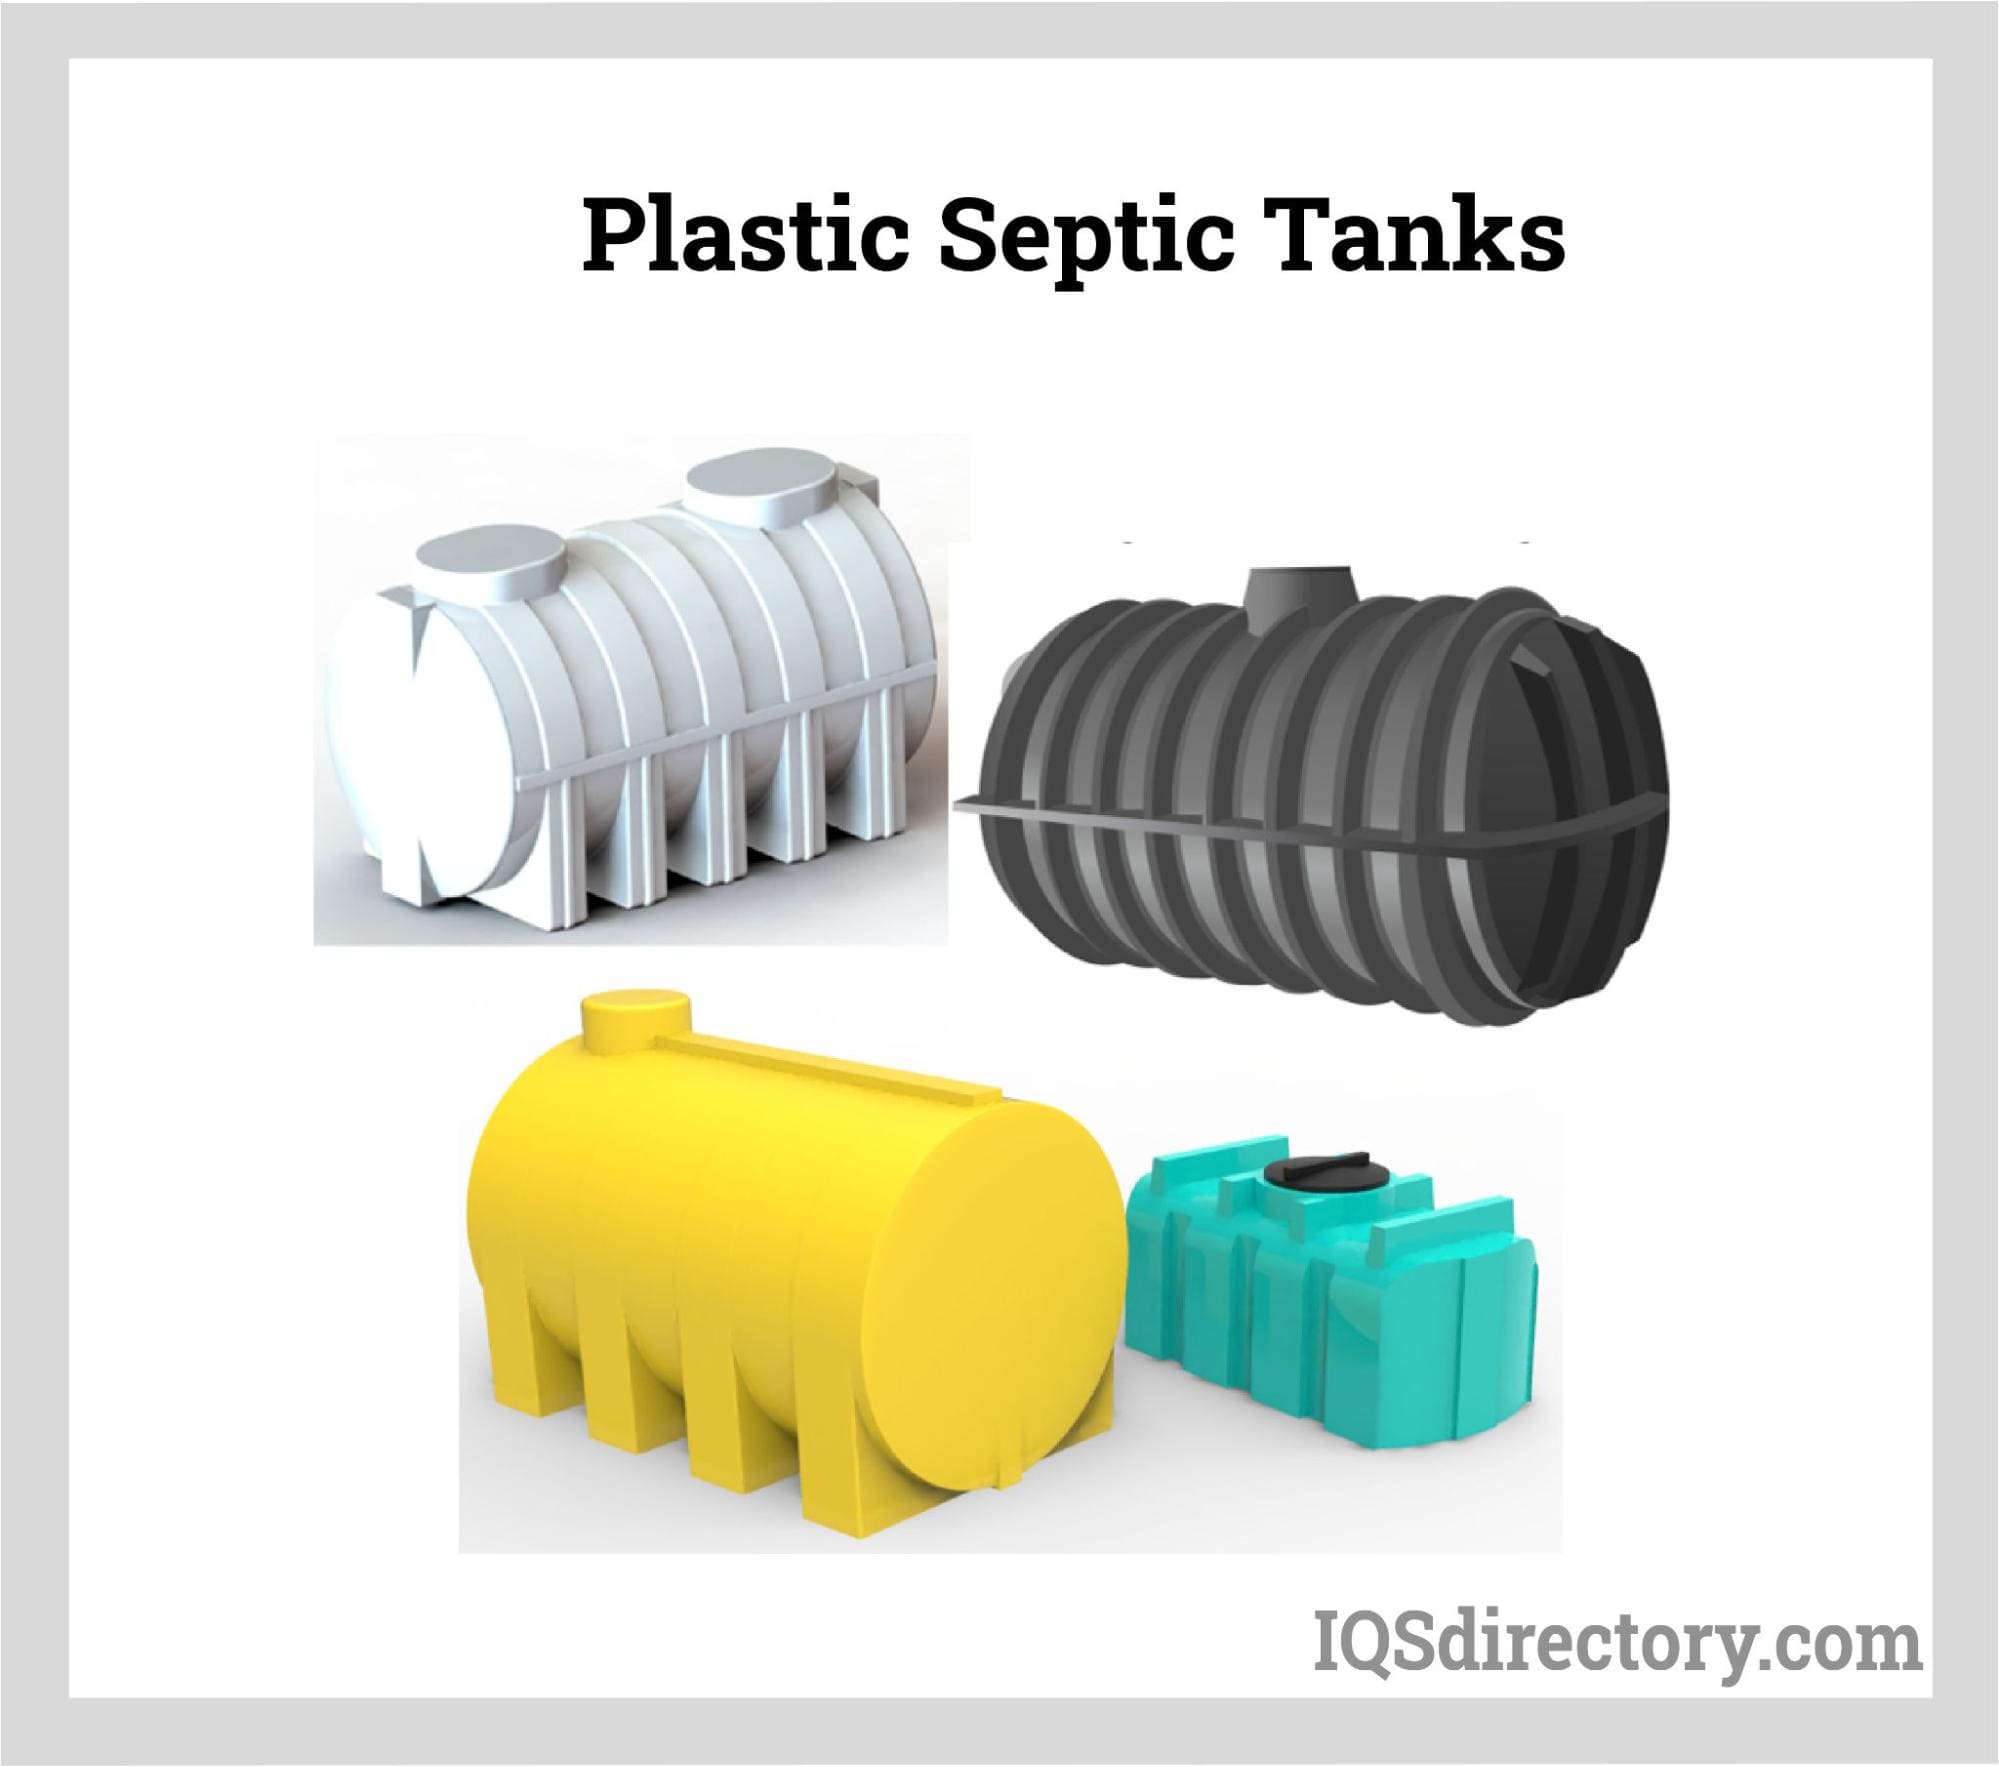 Plastic Septic Tanks